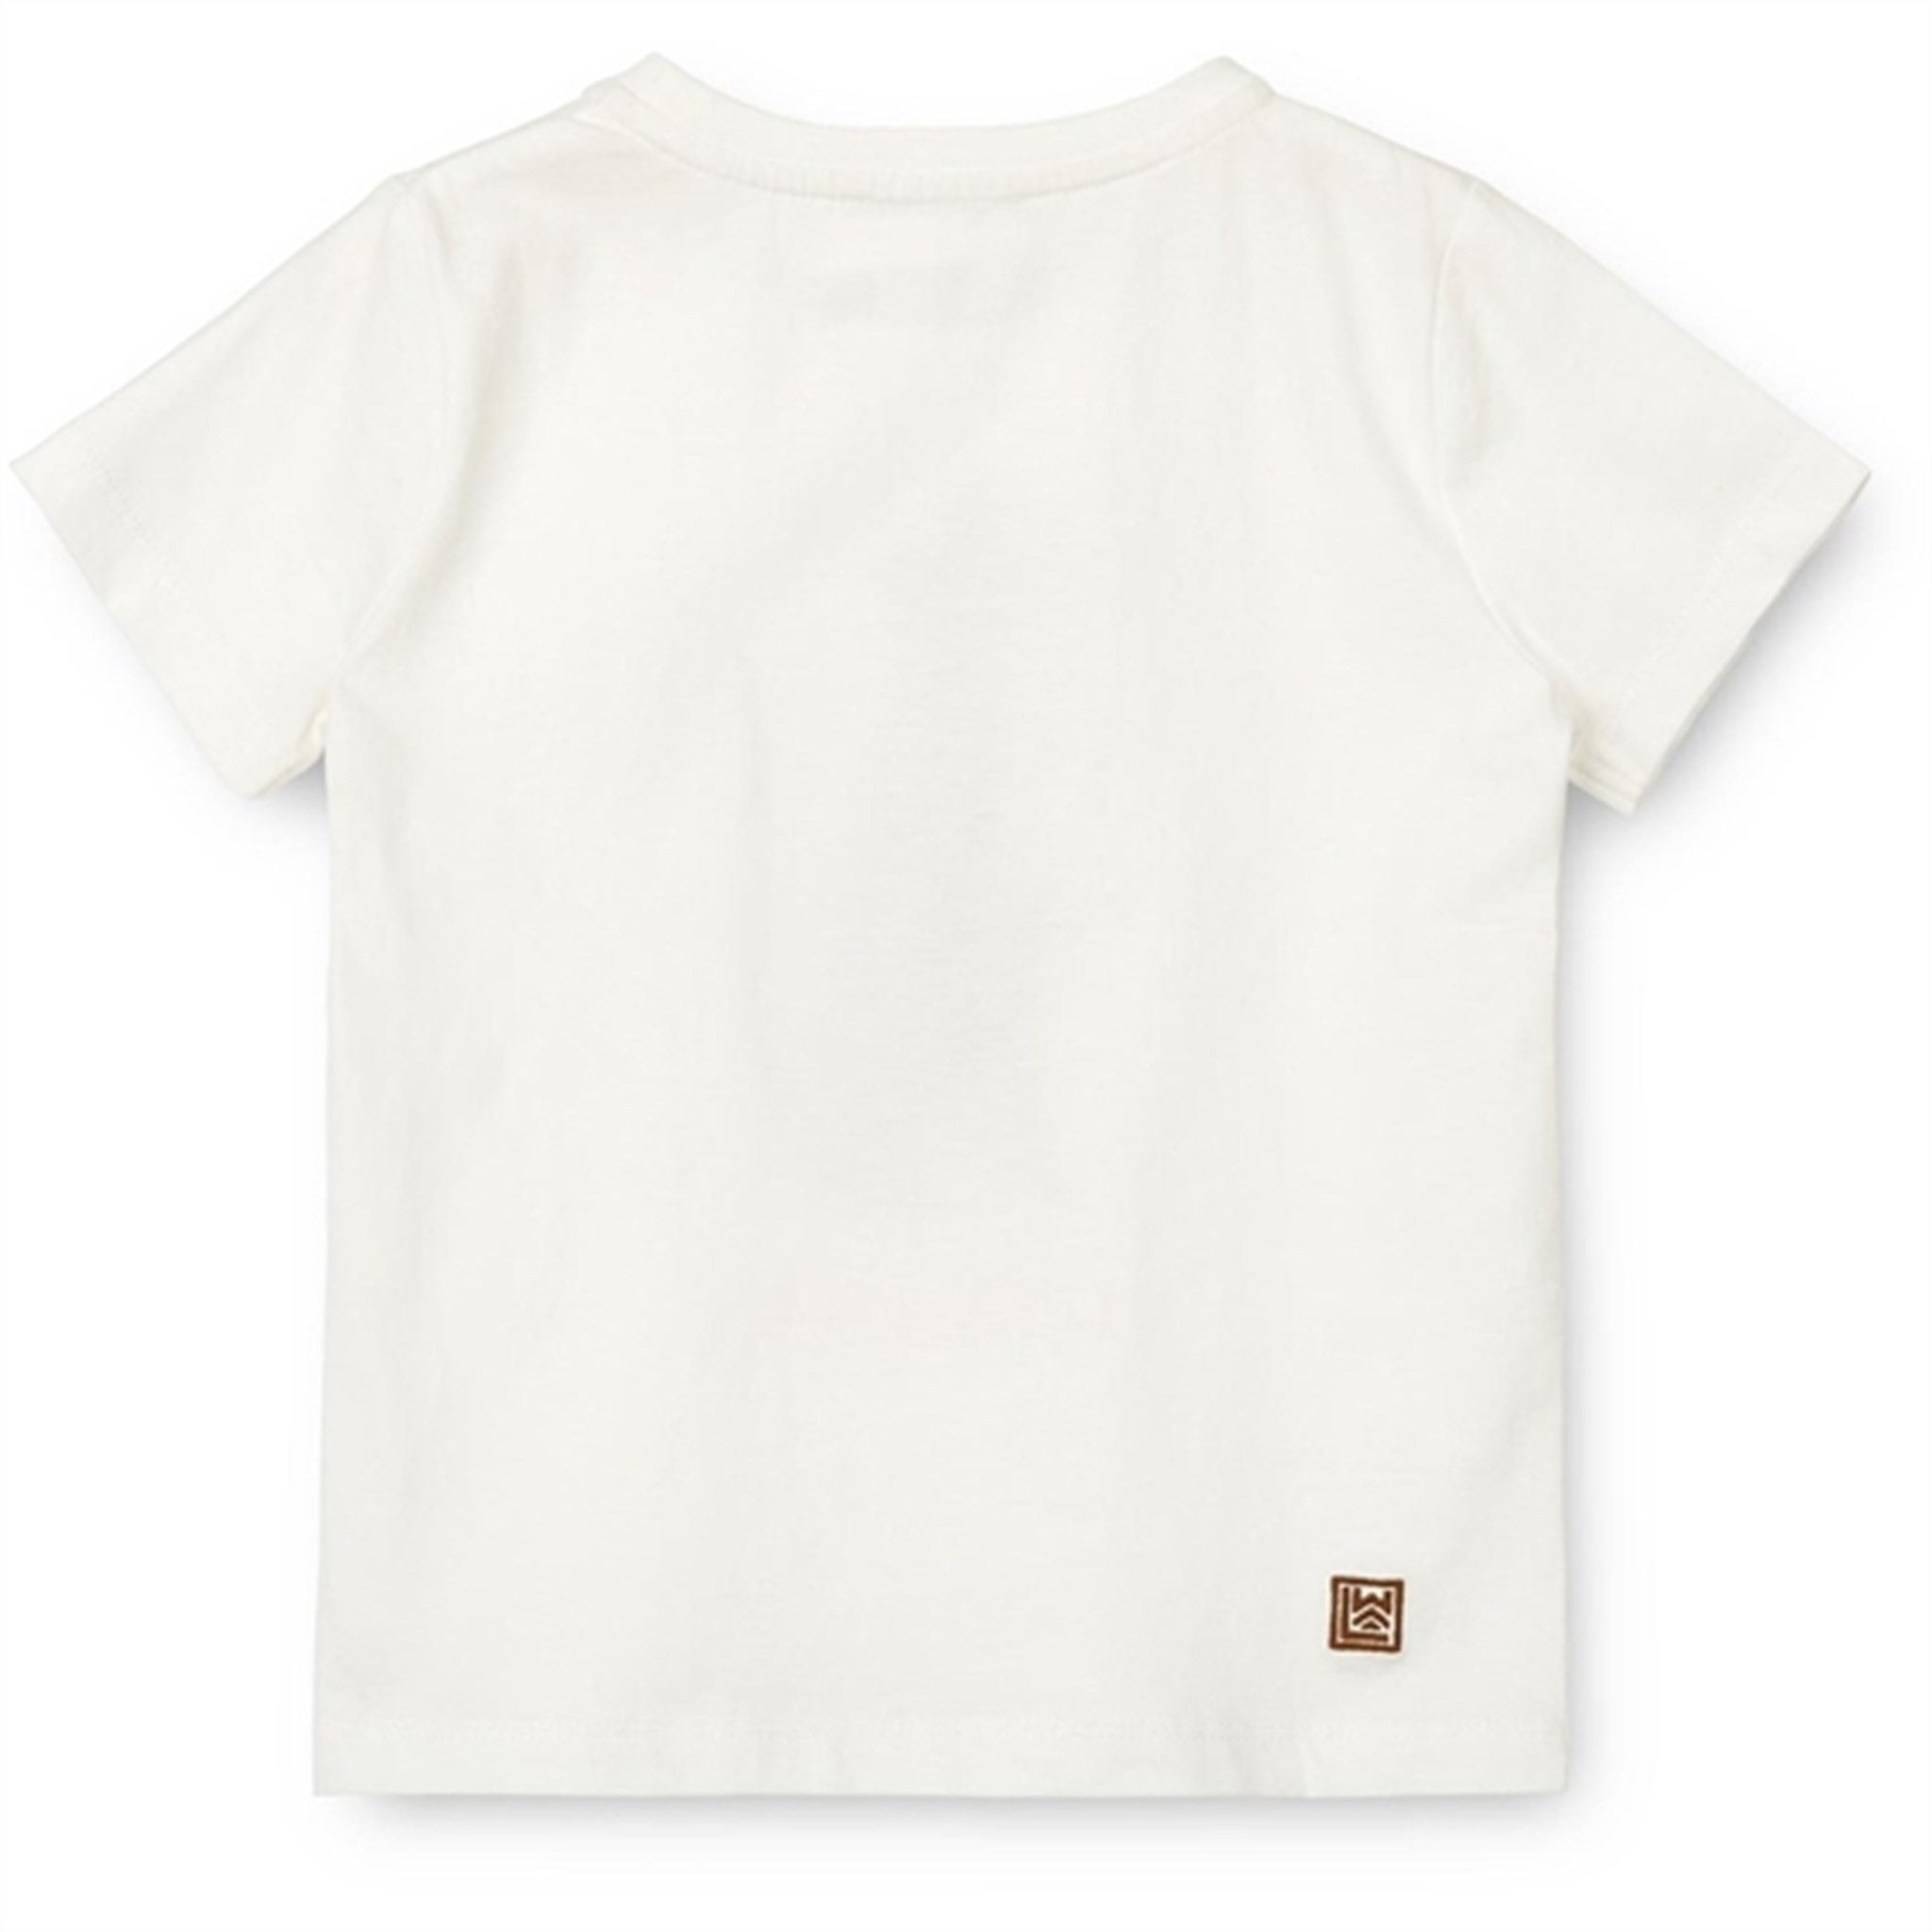 Liewood Leopard/Crisp White Apia Baby Placement T-shirt 2